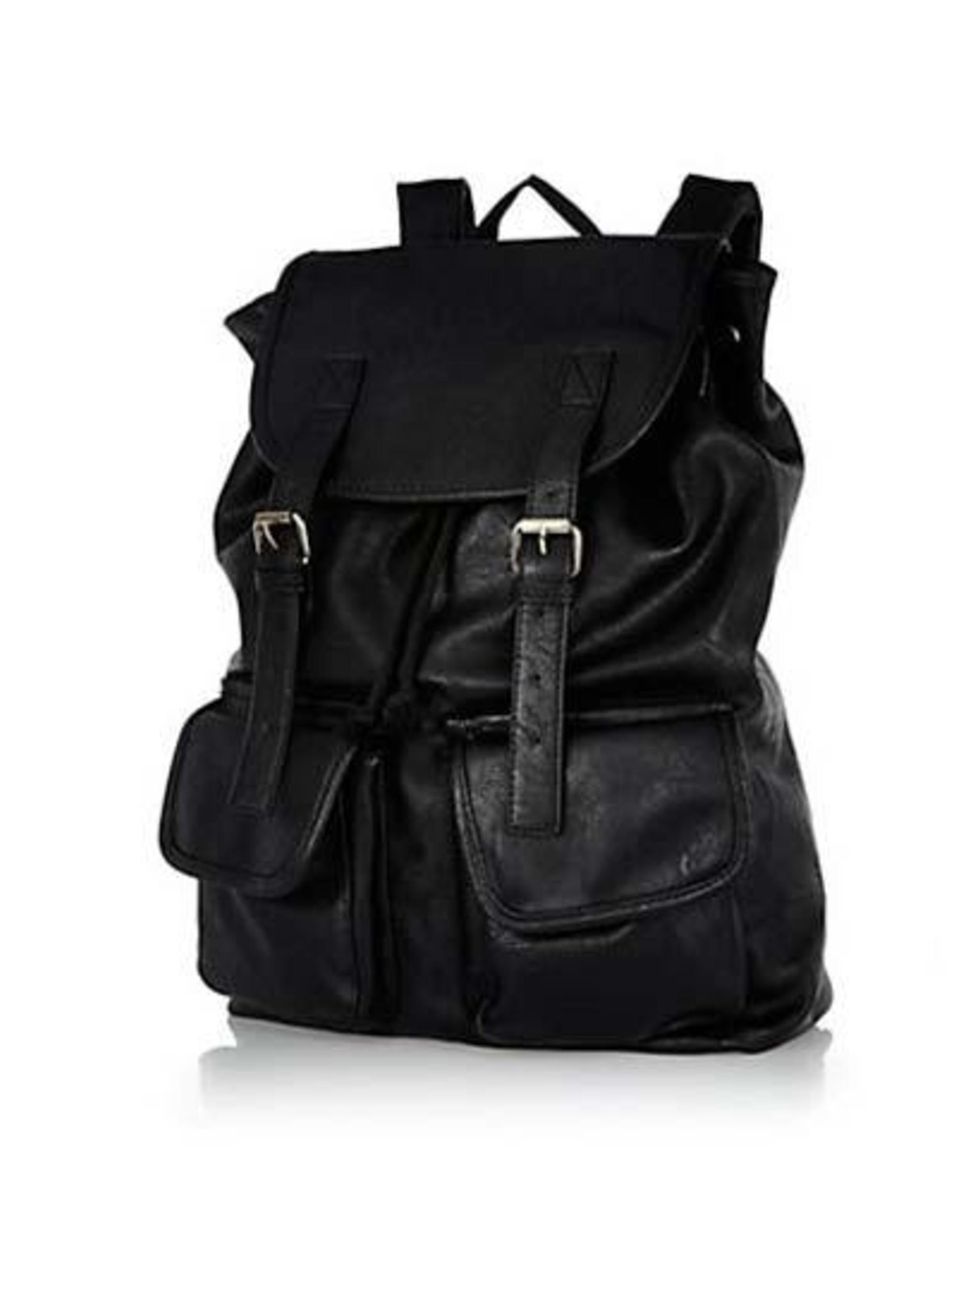 <p><a href="http://www.riverisland.com/men/bags--wallets/backpacks/Black-leather-look-backpack-279919">River Island</a> leather backpack, £32</p>